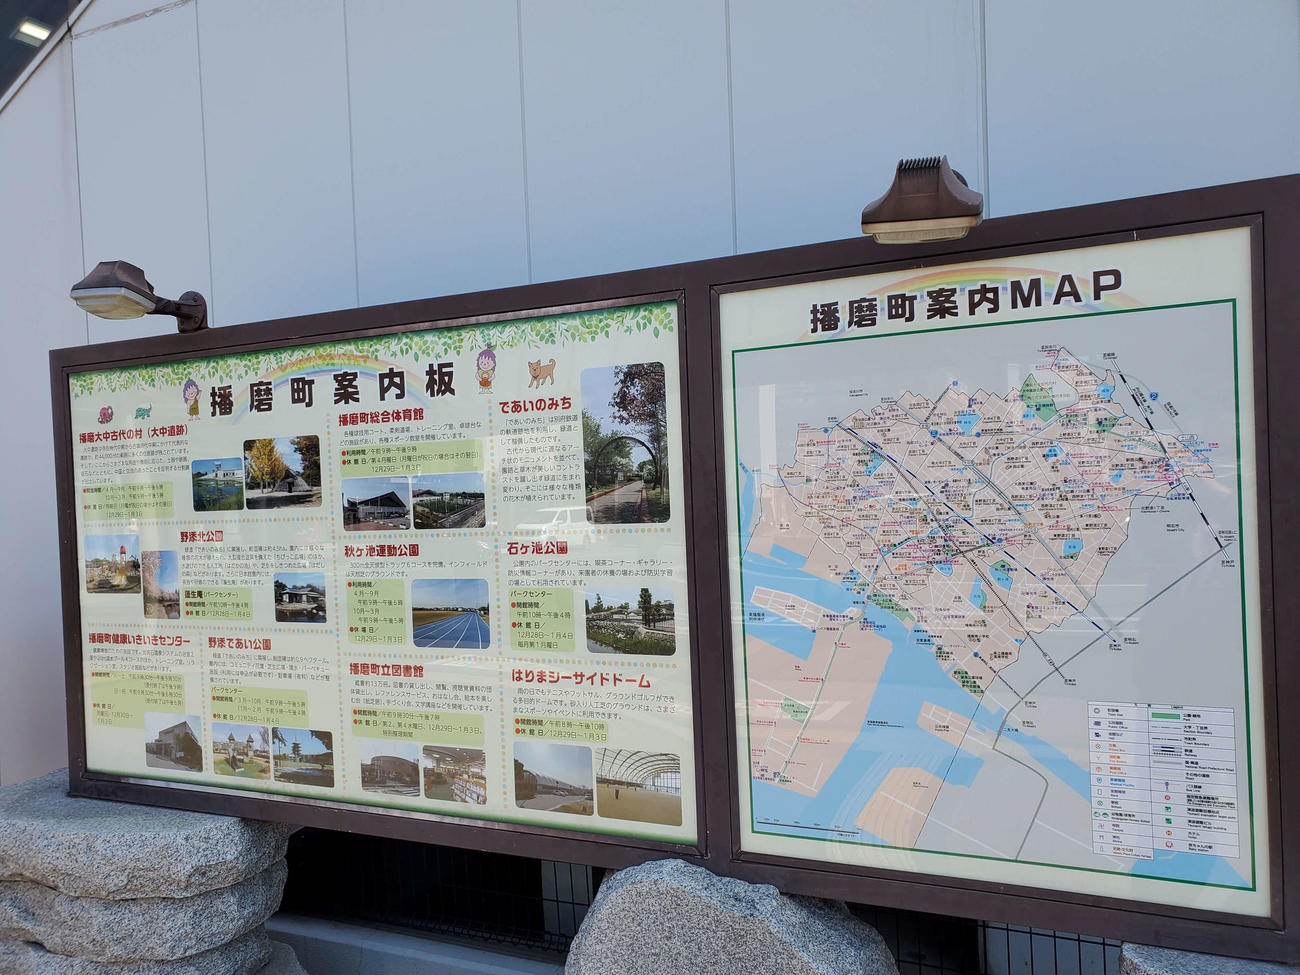 〈2〉駅前の播磨町案内板と地図